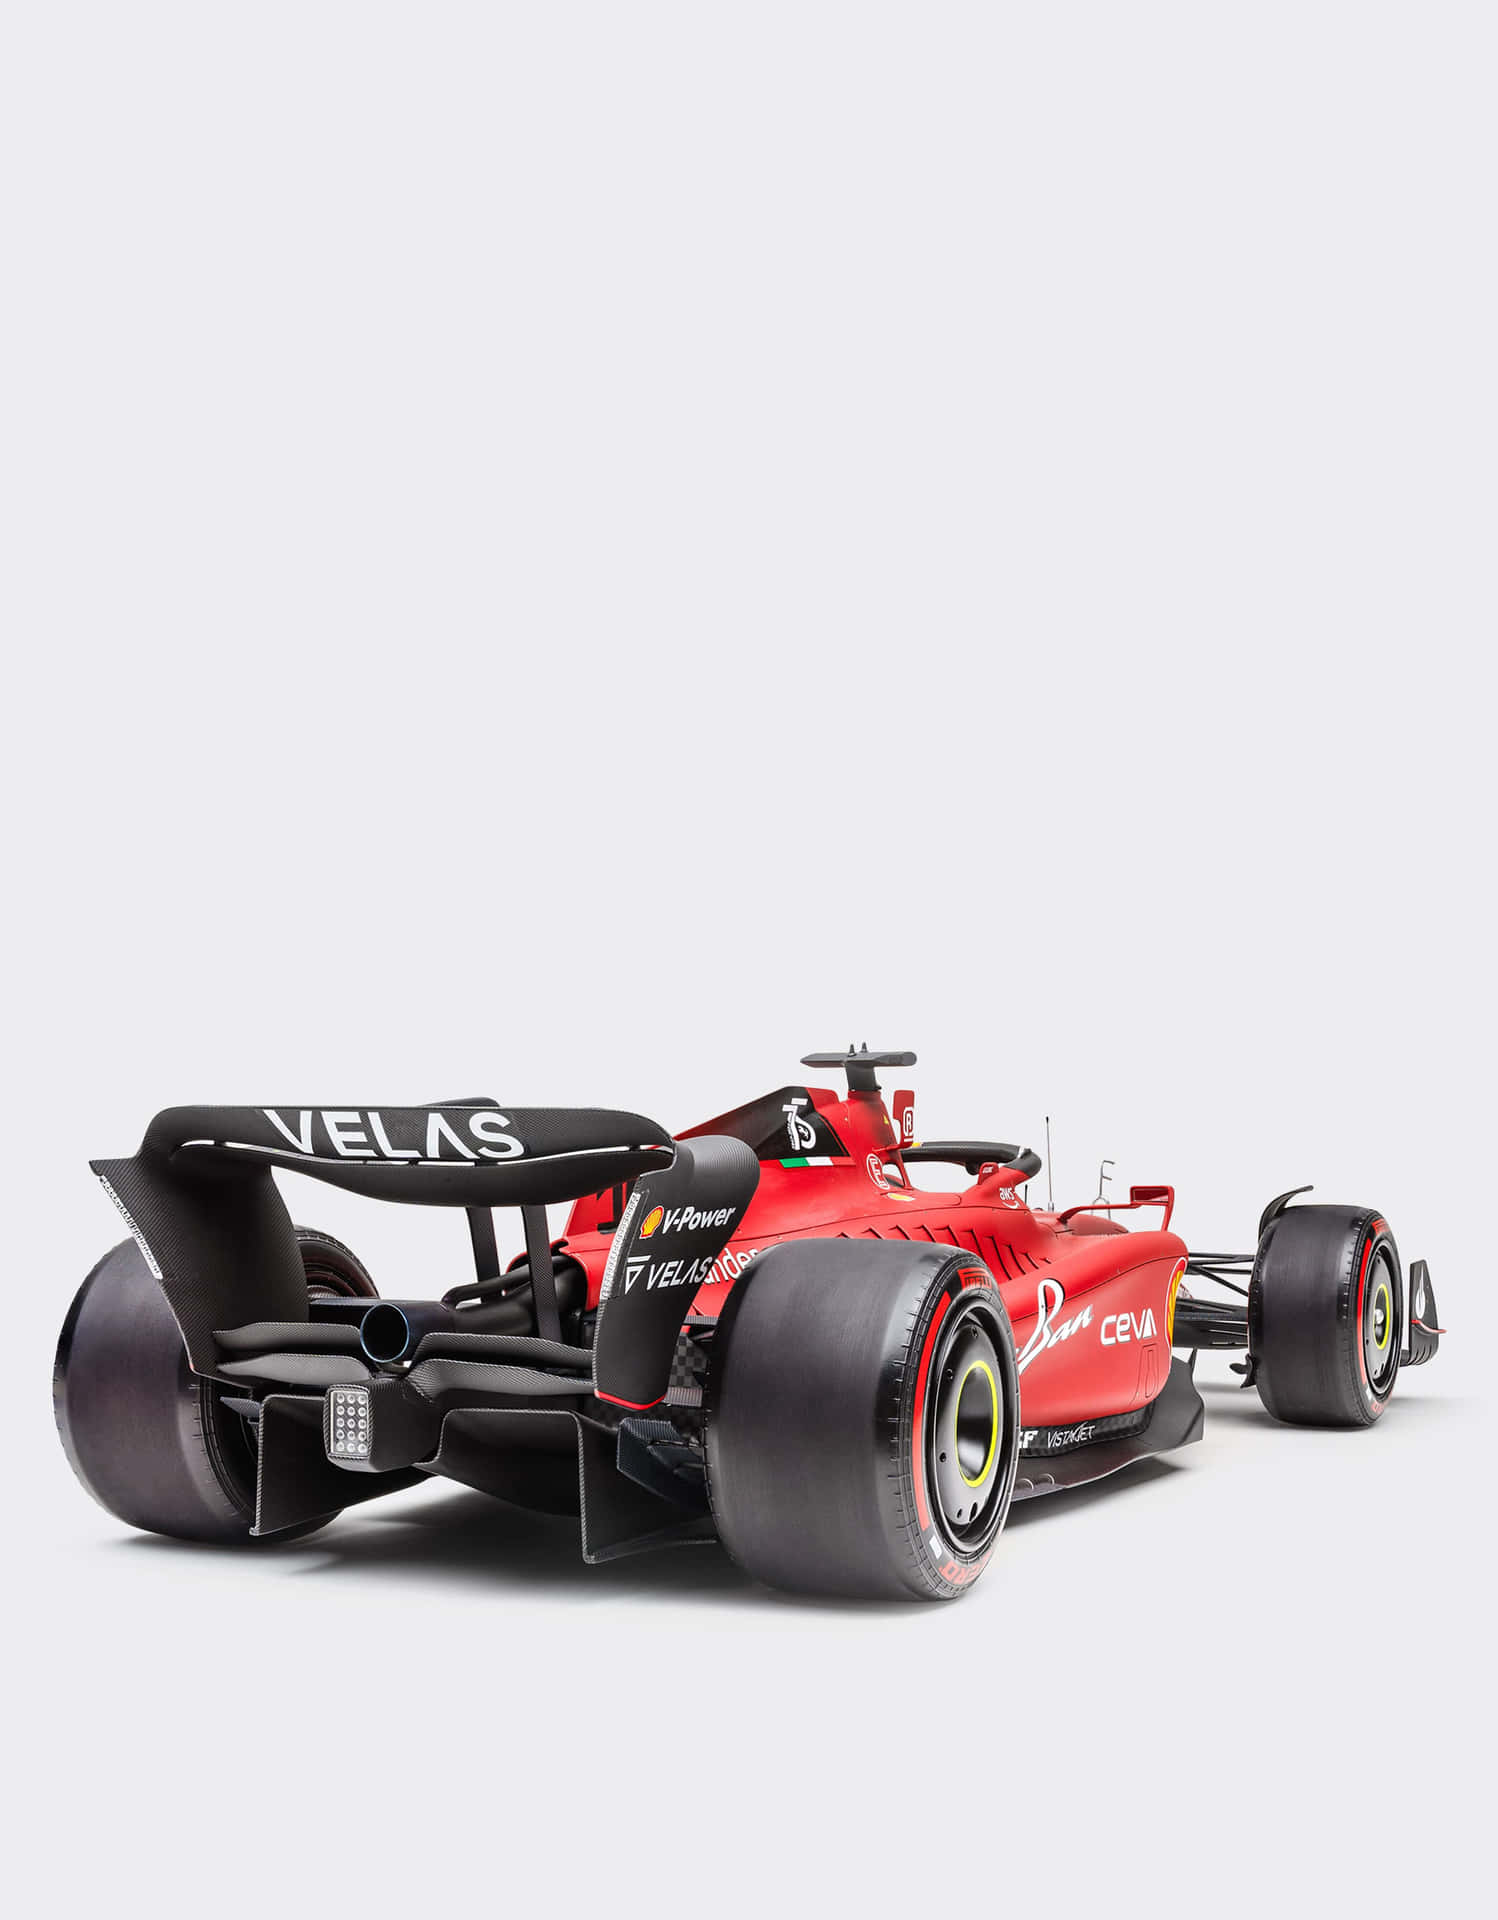 Ferrari F1 Racing Car Studio Shot Wallpaper